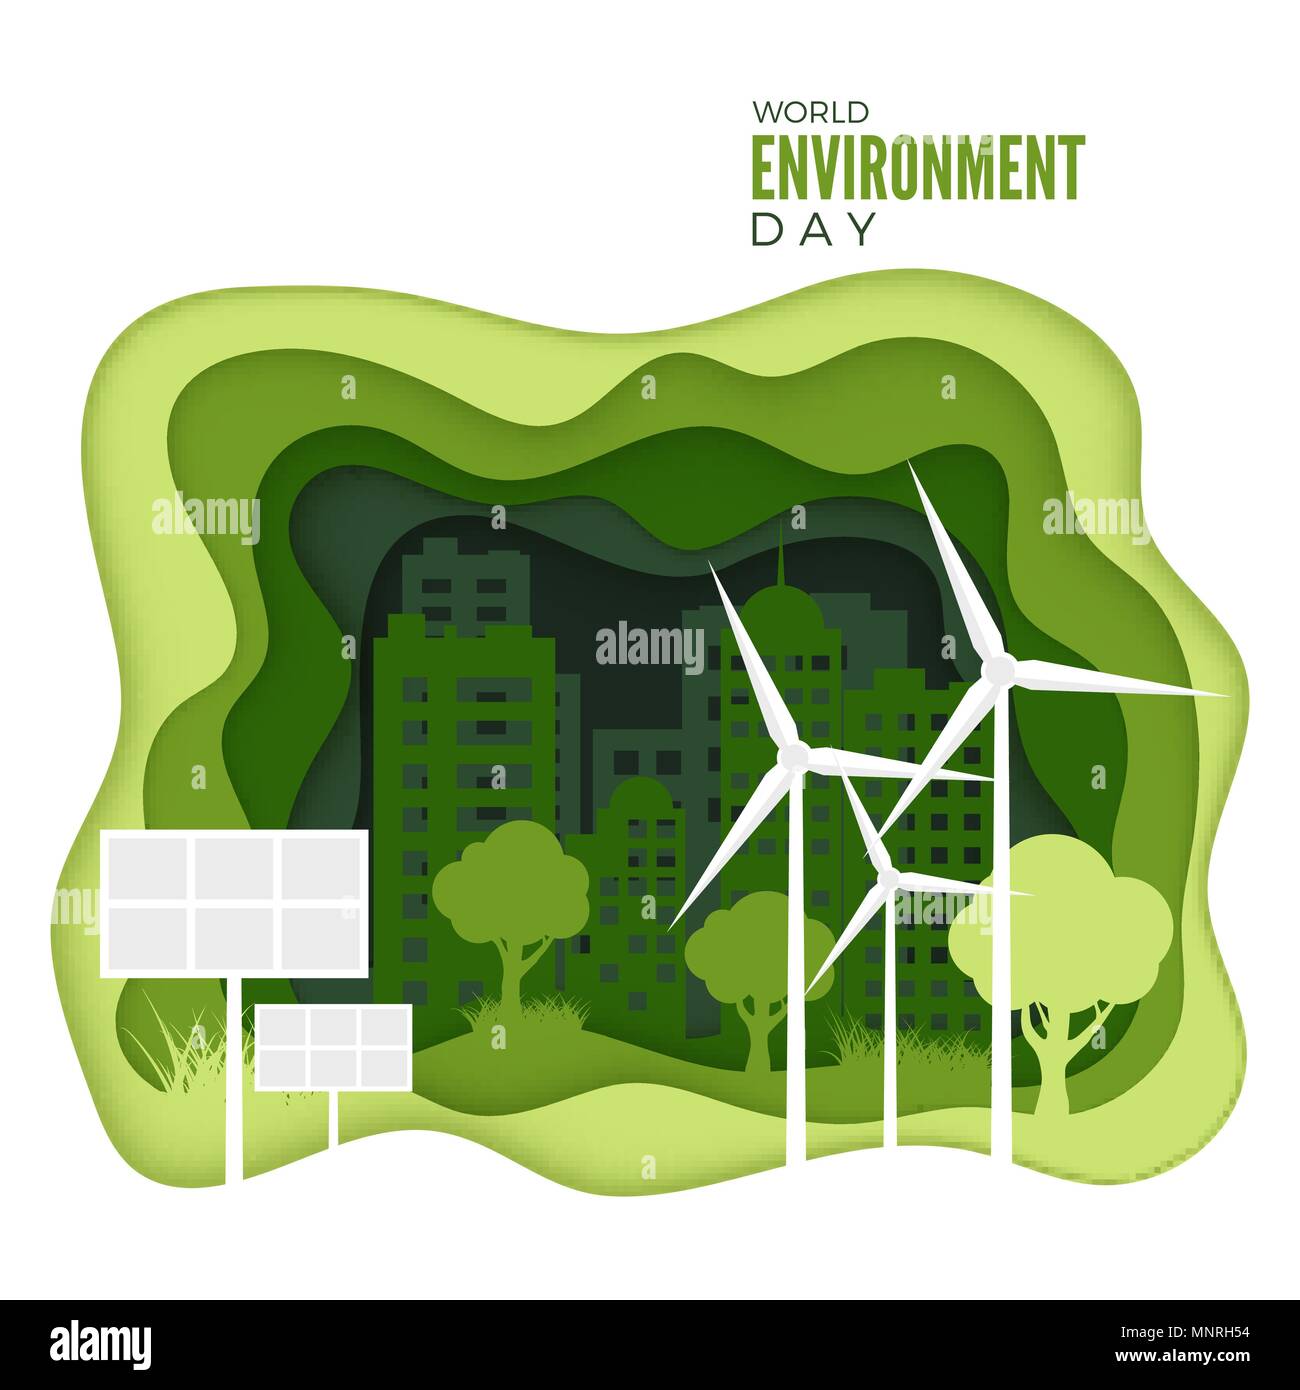 Tag der Umwelt. Abstract Green City Konzept. Ökologie Konzept Banner mit Papier schneiden grüne Textur. Grüne Energie Konzept. Vector Illustration iso Stock Vektor